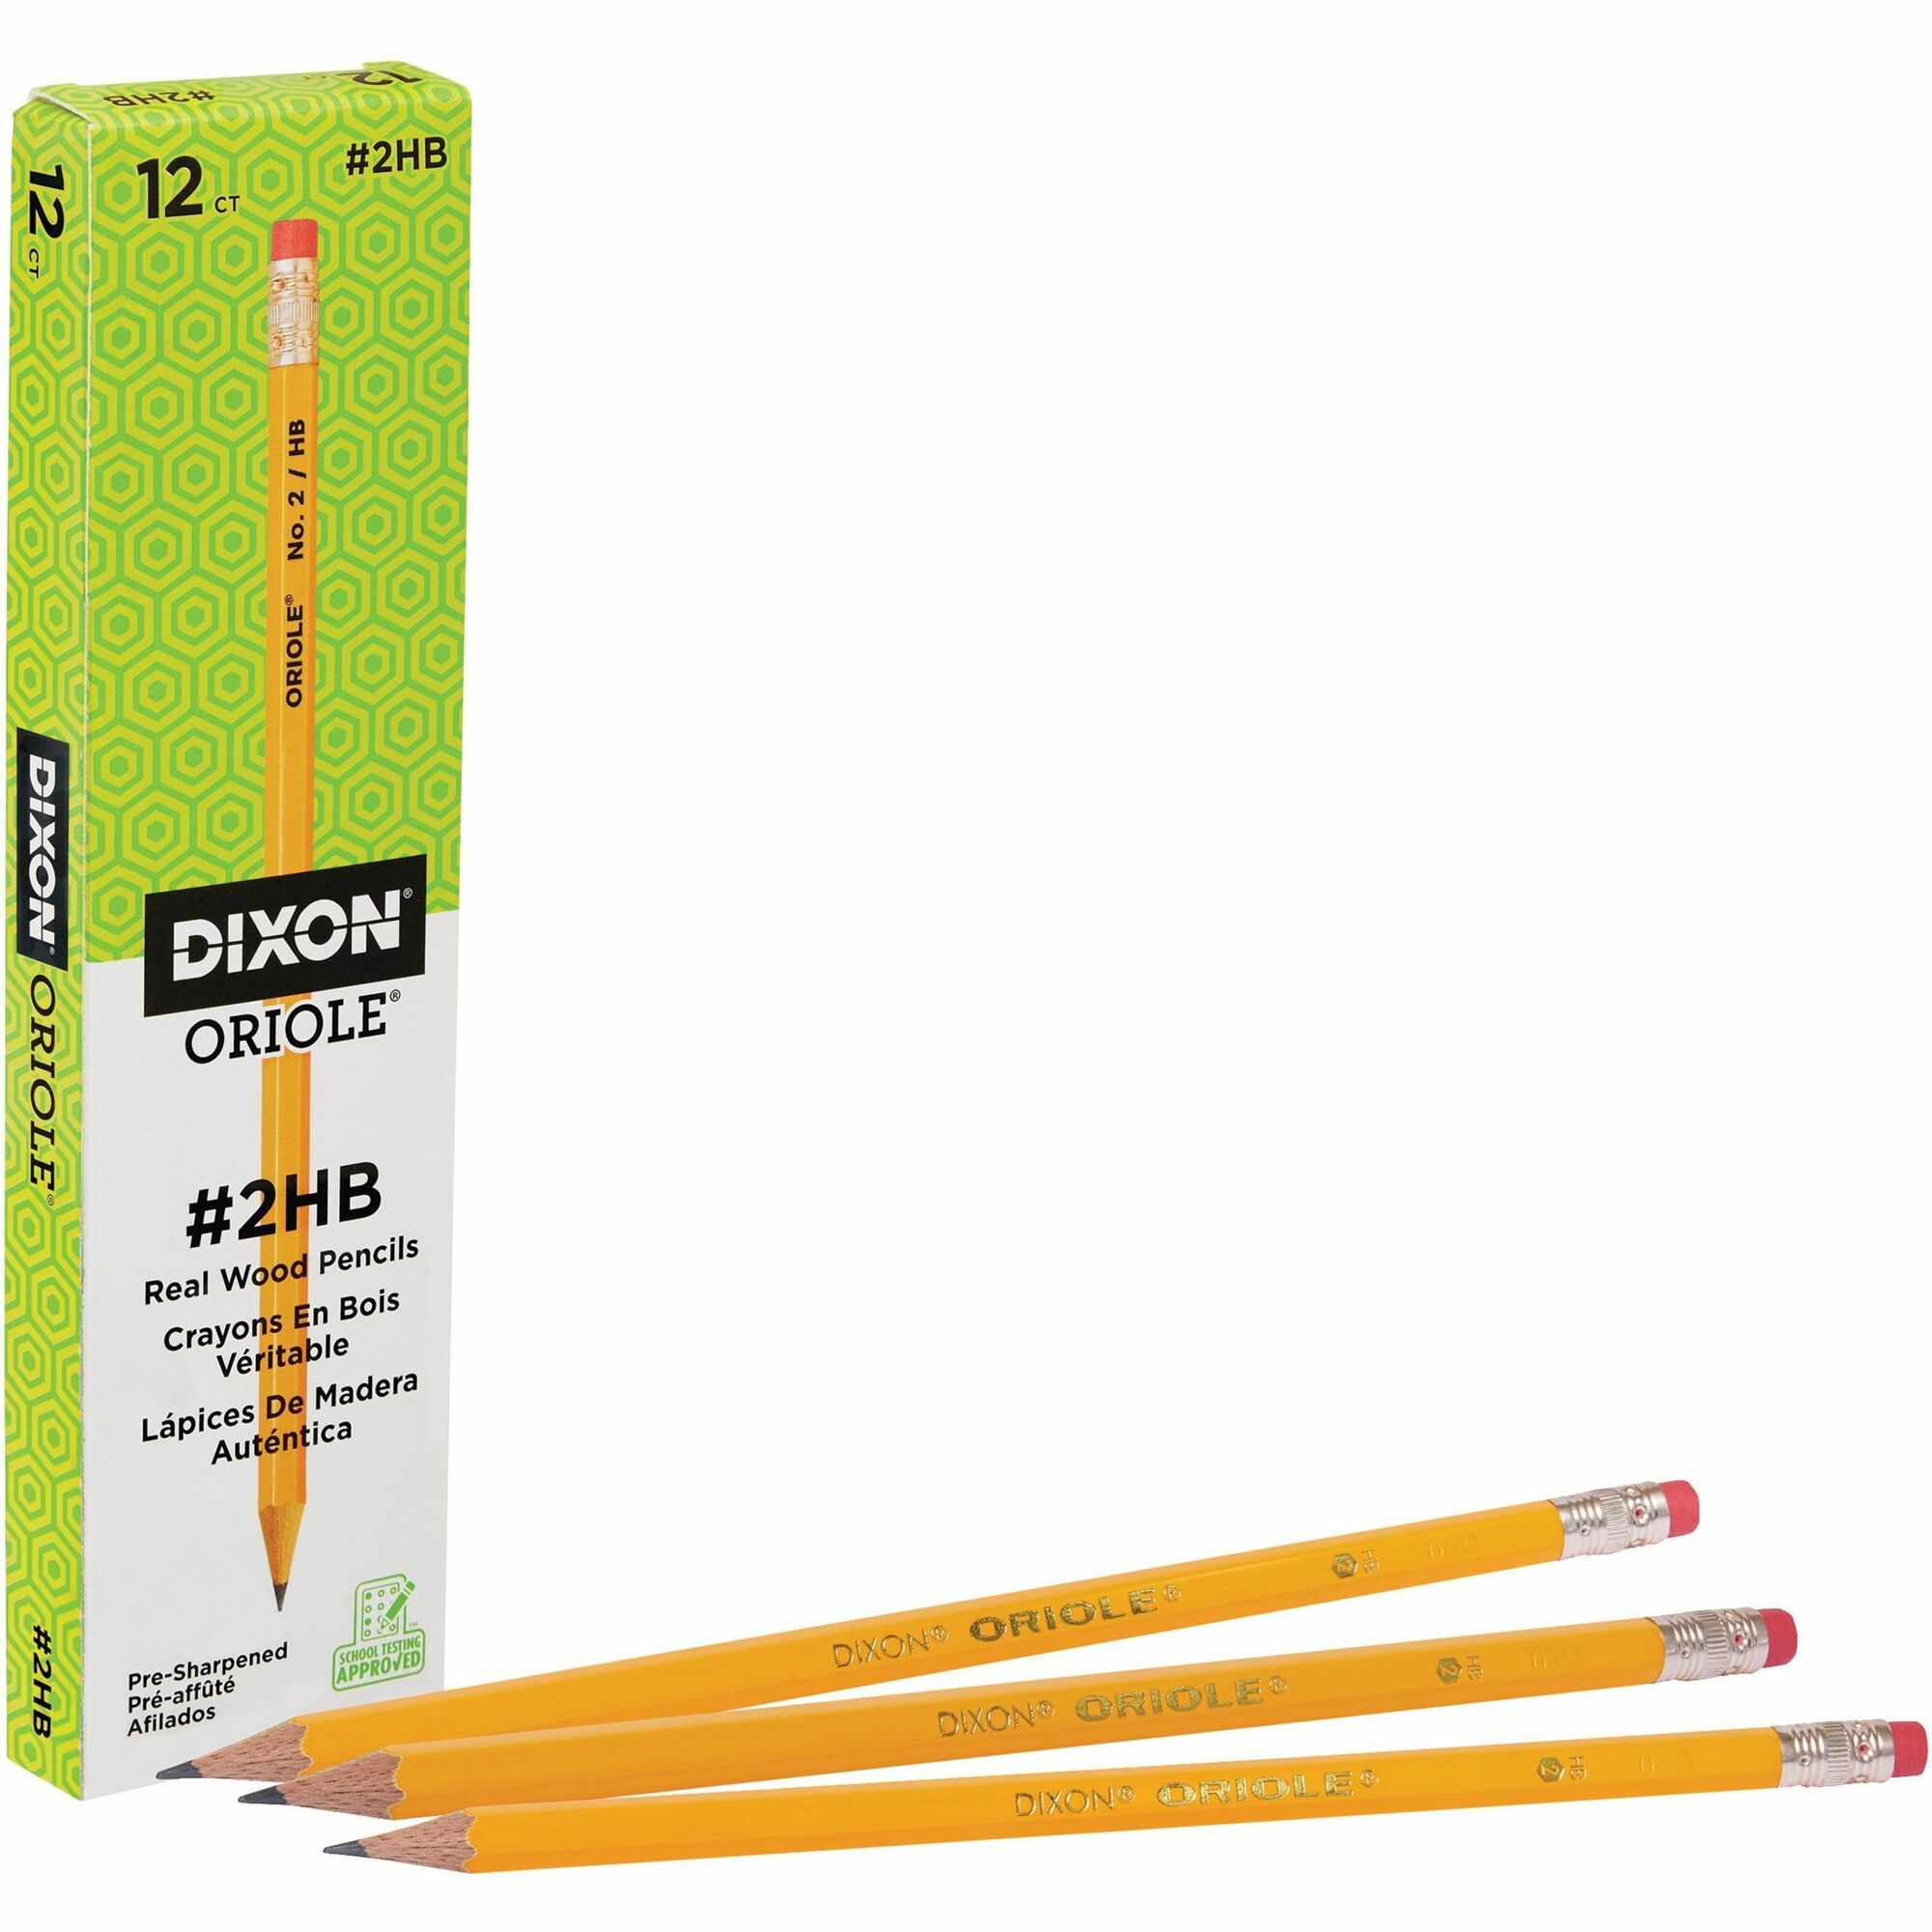 ITA36523 Lead Pencil Wedge Latex Free Integra Pink Pencil Cap Eraser 144/Box 